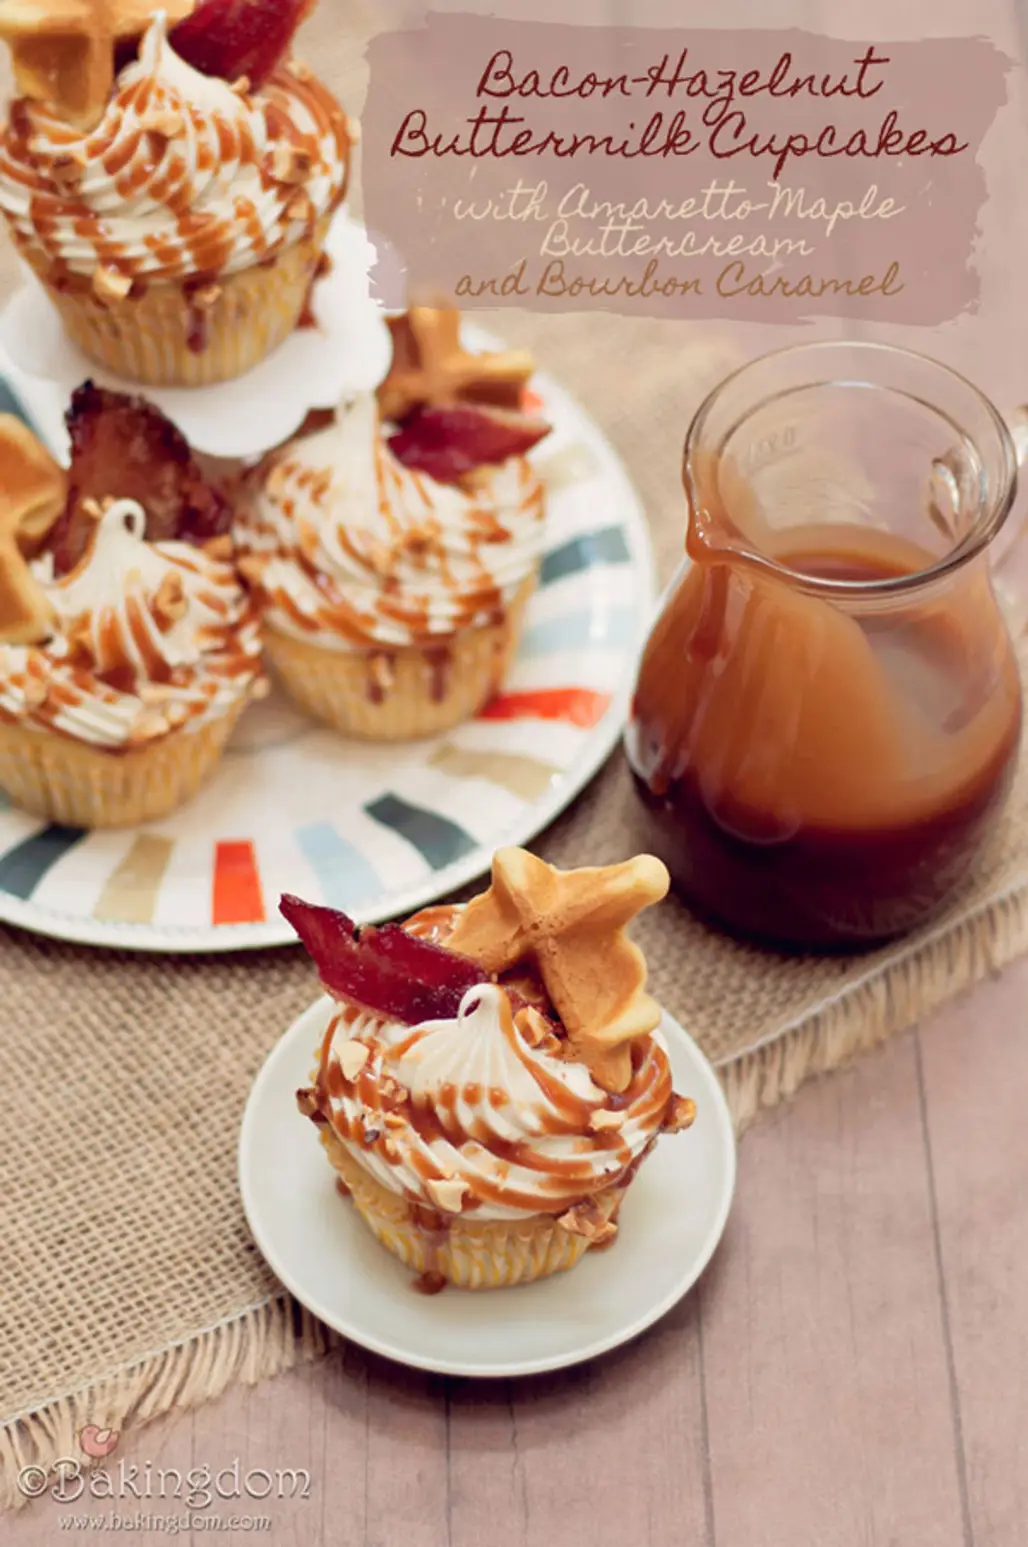 Bacon-Hazelnut Buttermilk Cupcakes